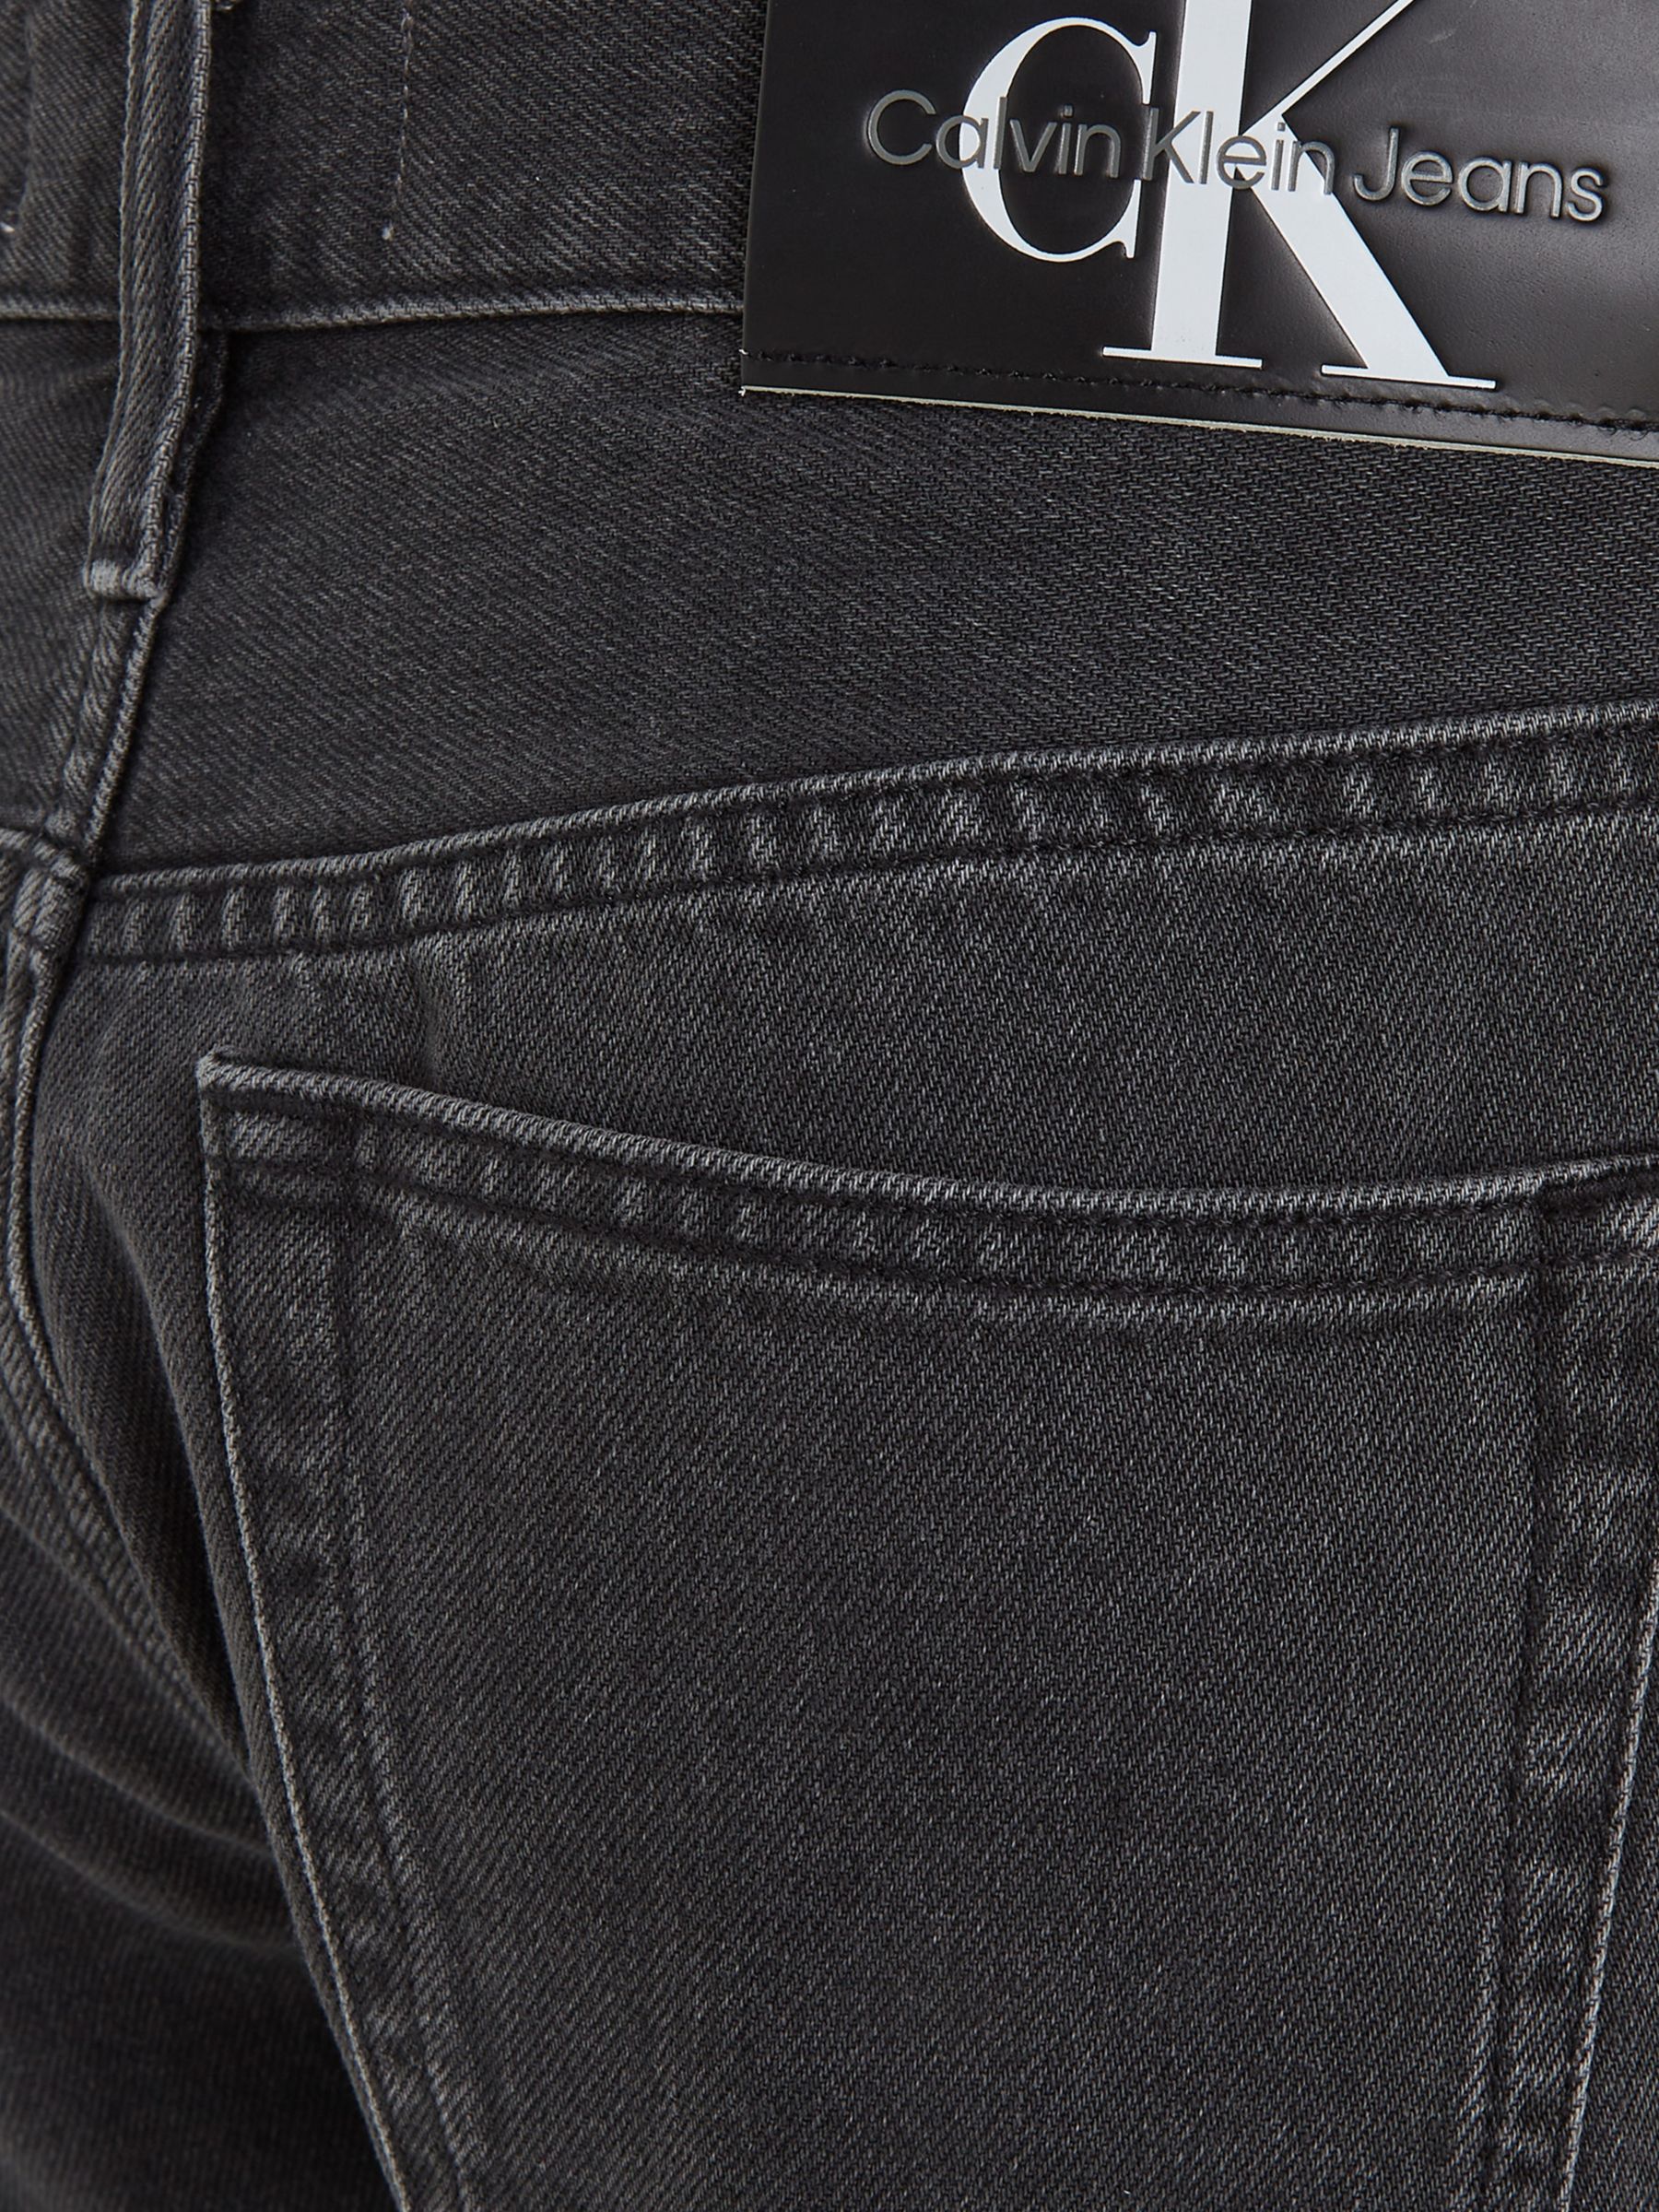 Buy Calvin Klein Jeans Regular Denim Shorts, Black Online at johnlewis.com